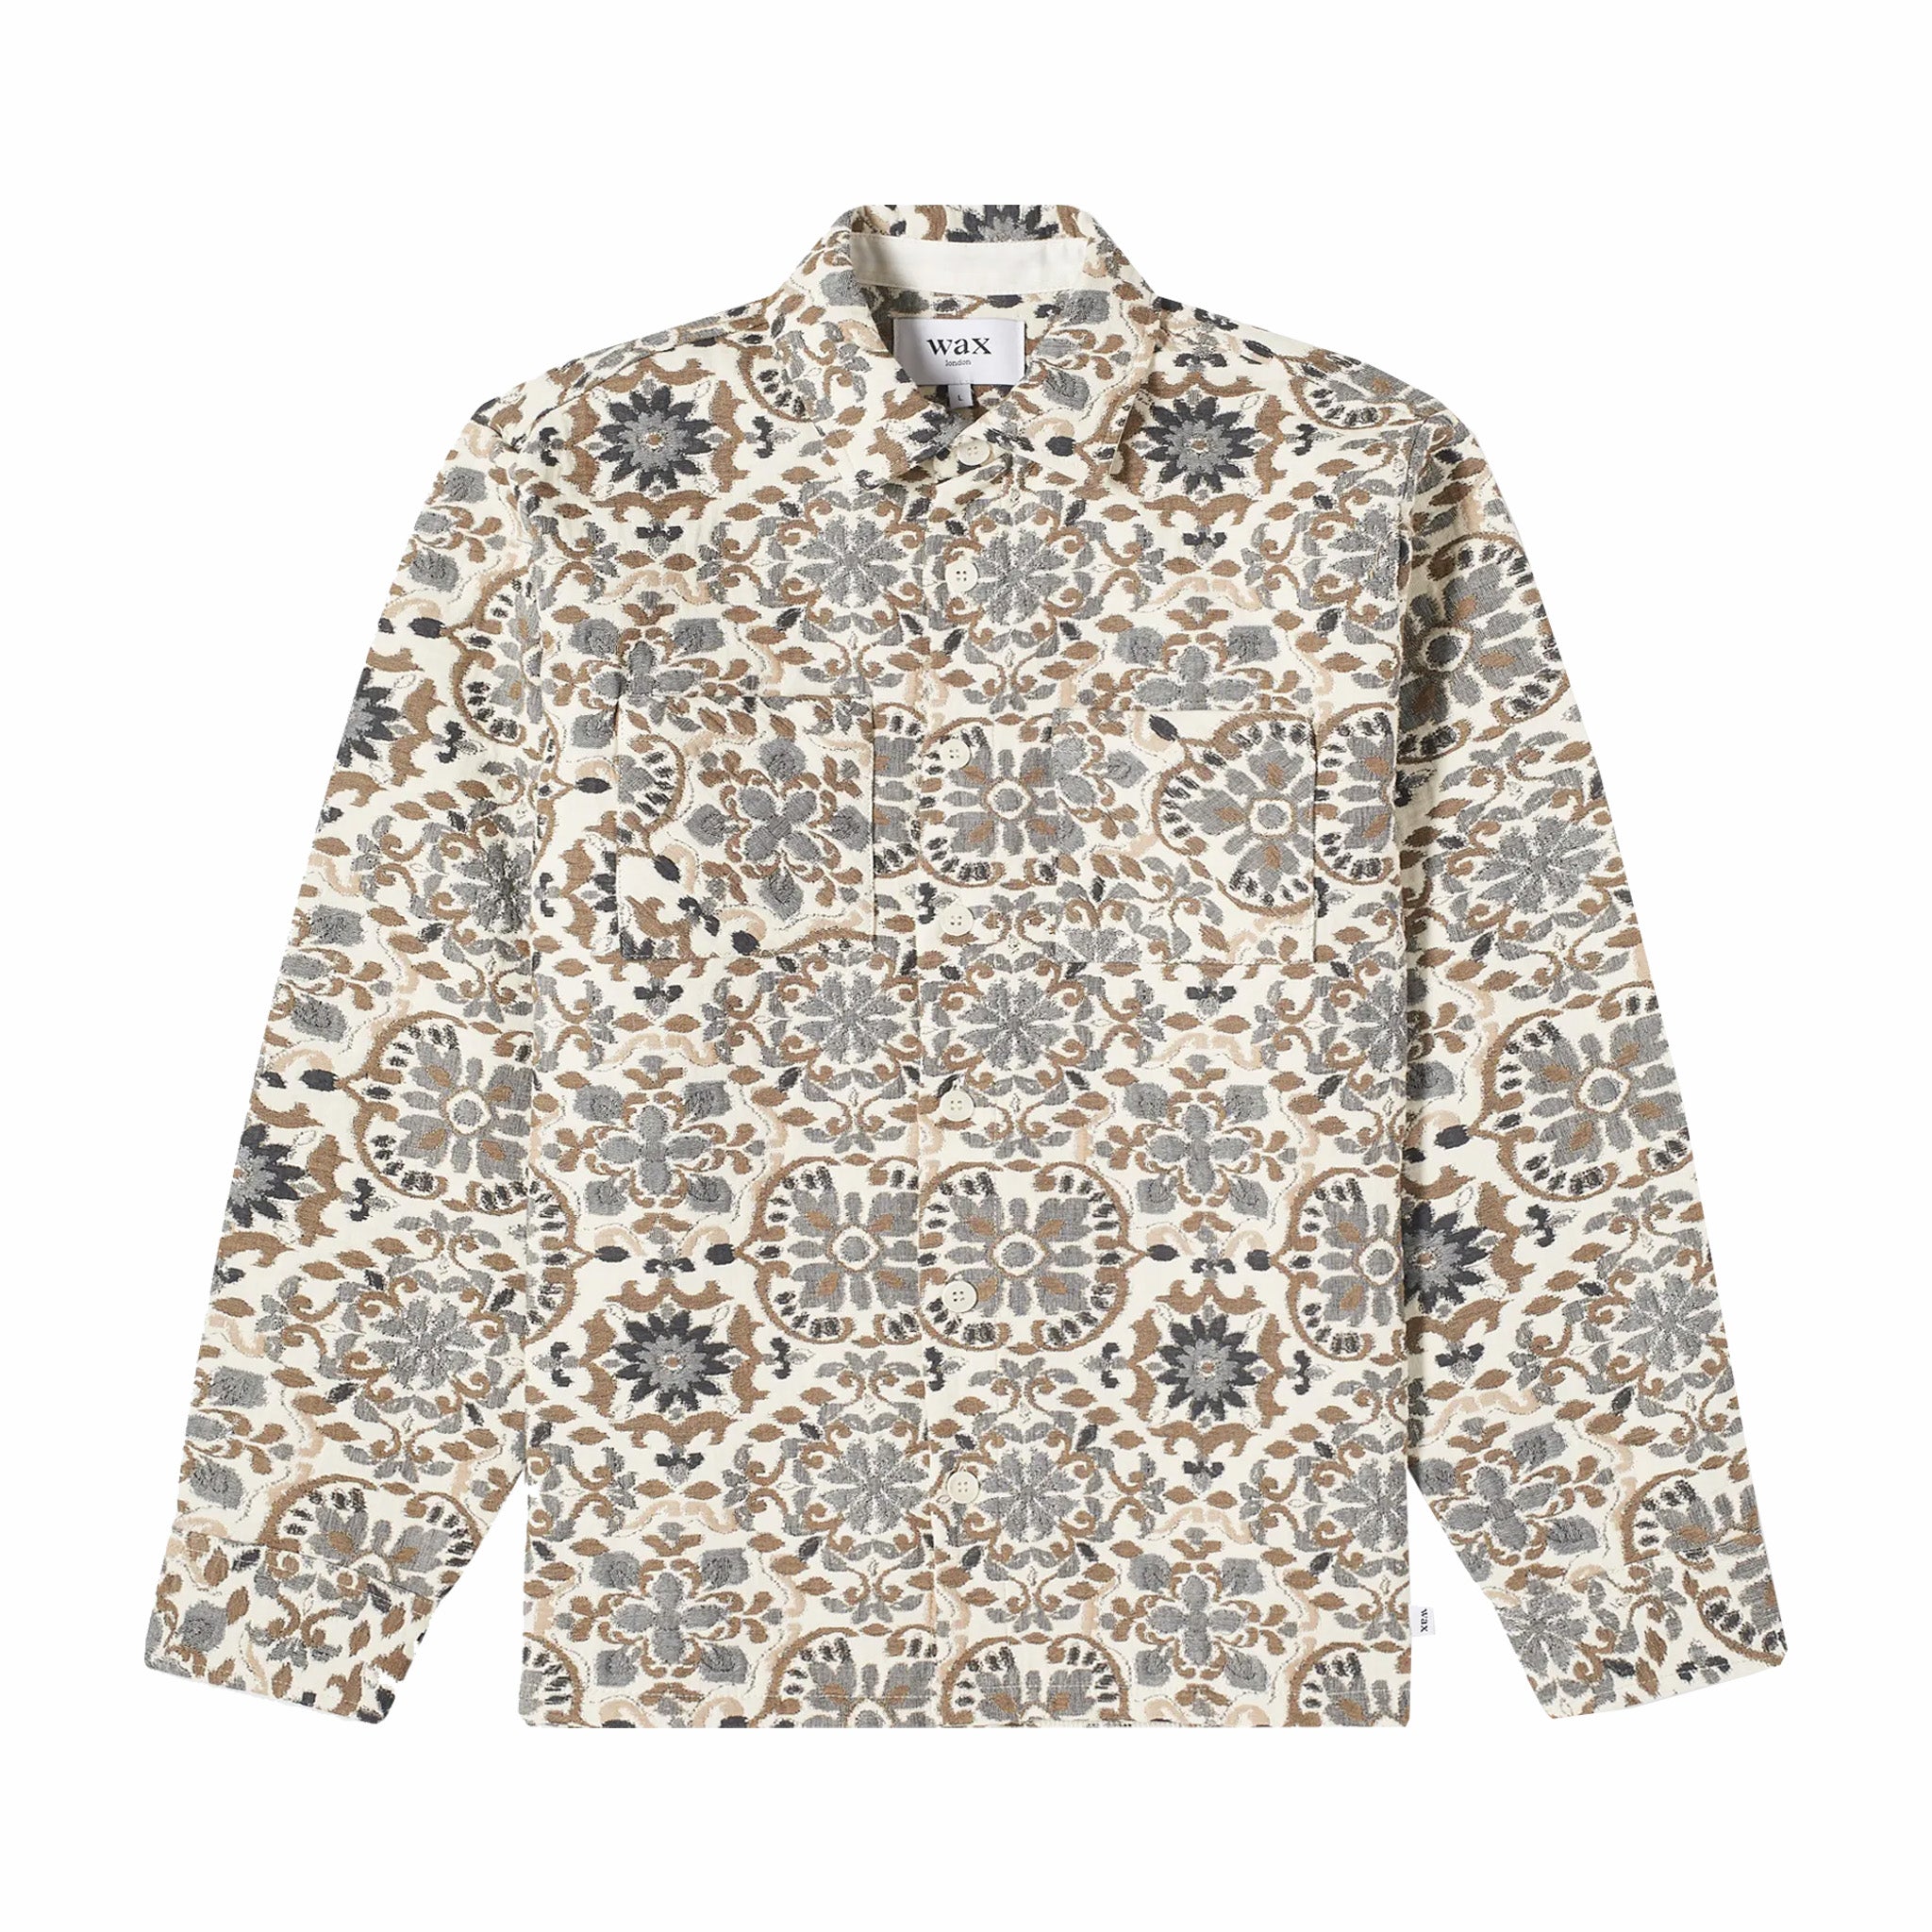 Wax London Whiting Overshirt - Mosaic Quilt (Beige) - August Shop